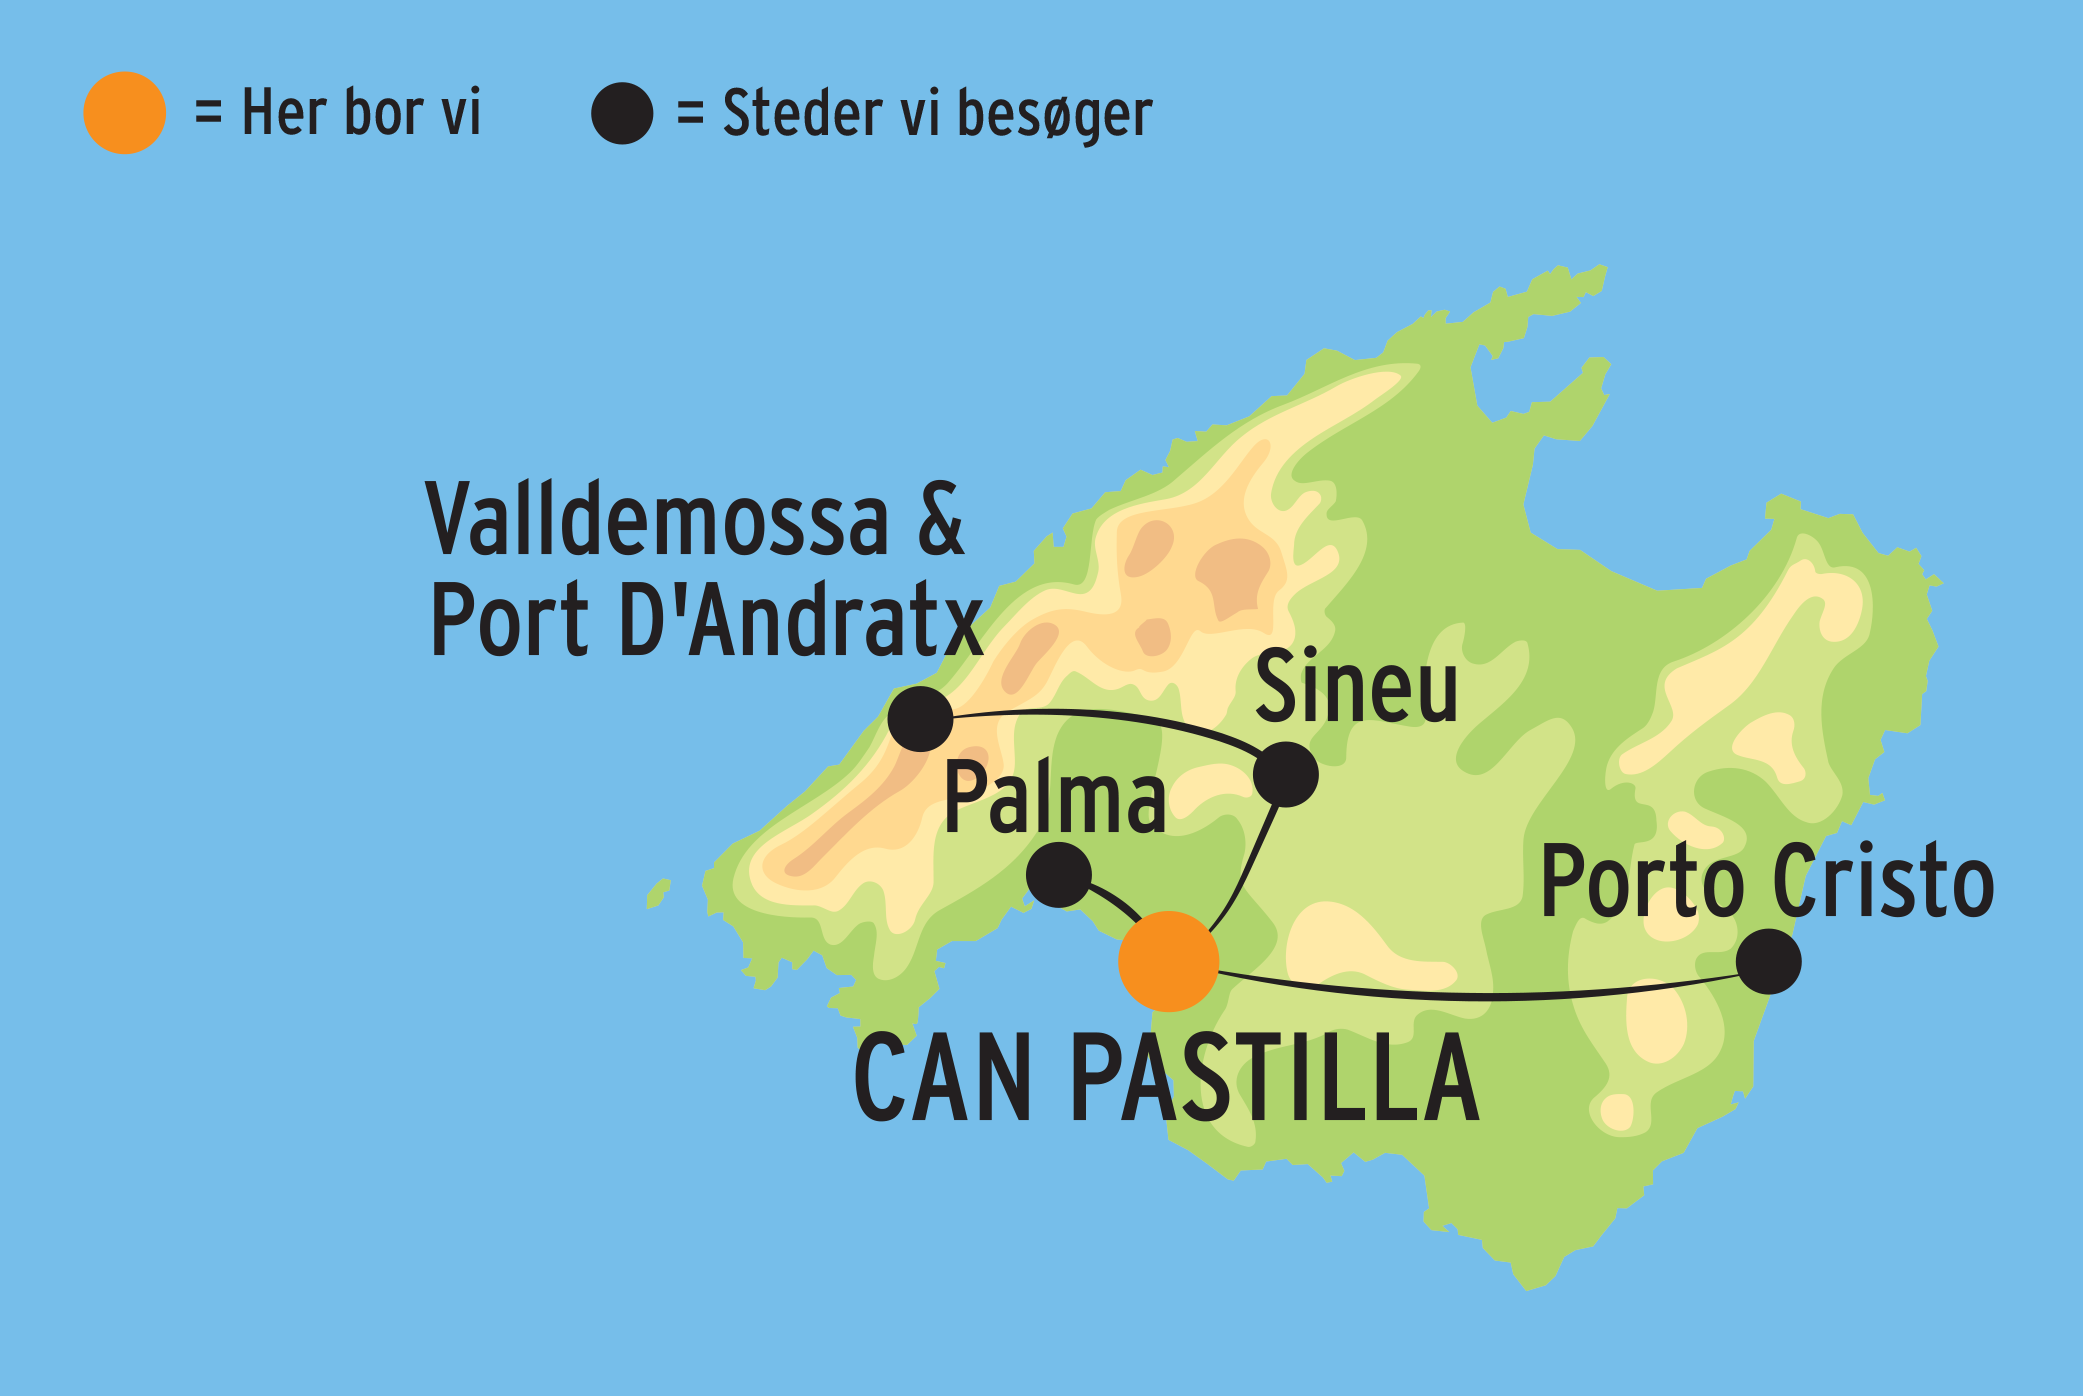 Kort over kulturrejsen til Mallorca